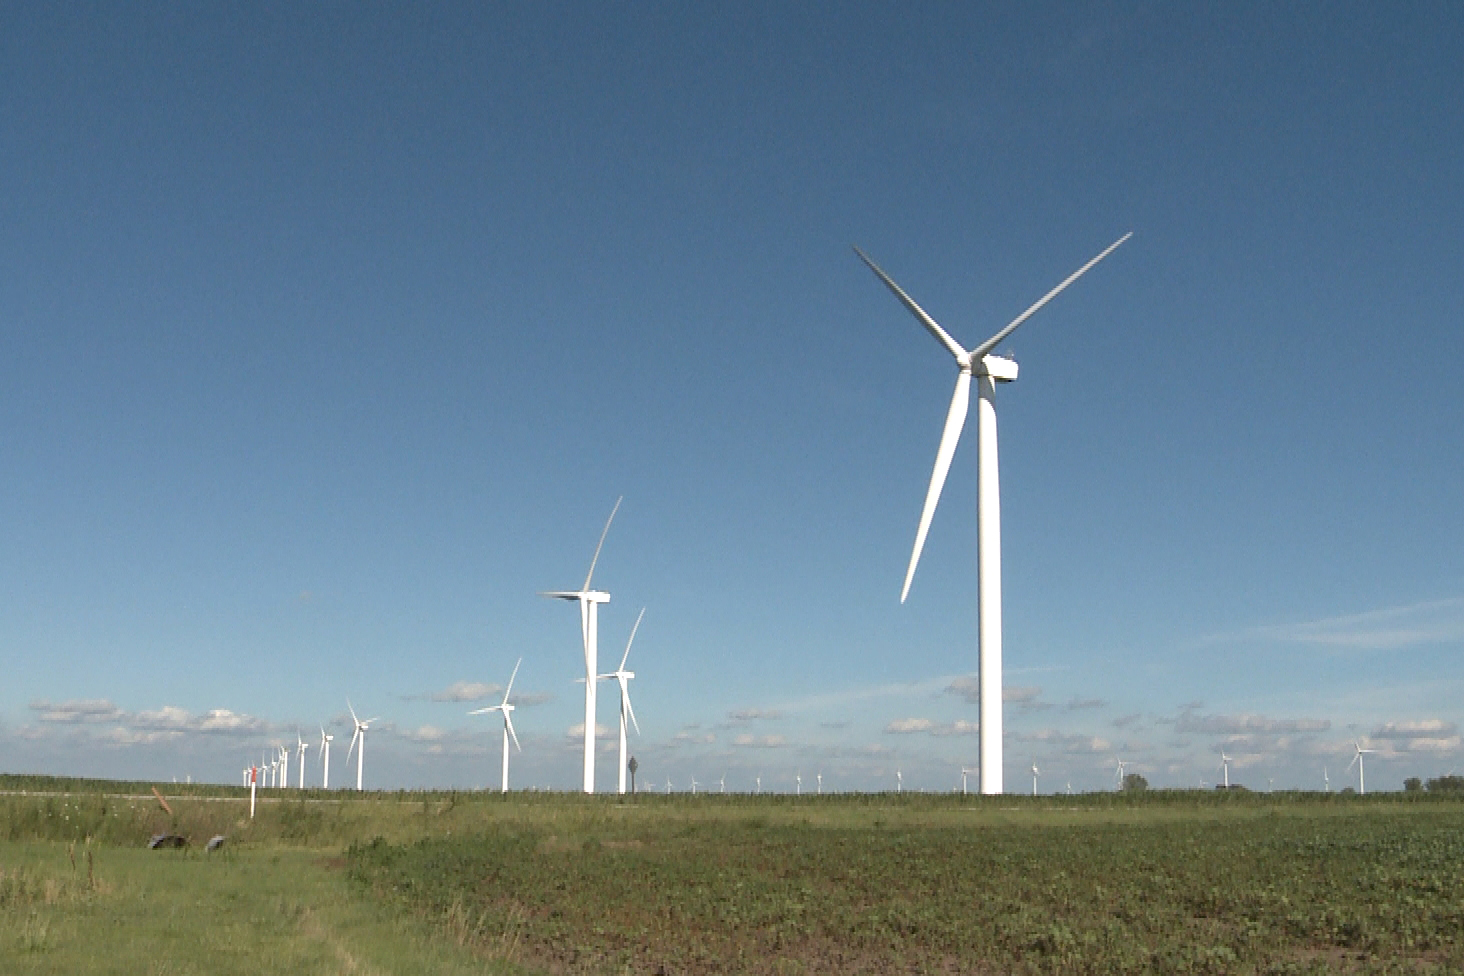 Several wind turbines in a field